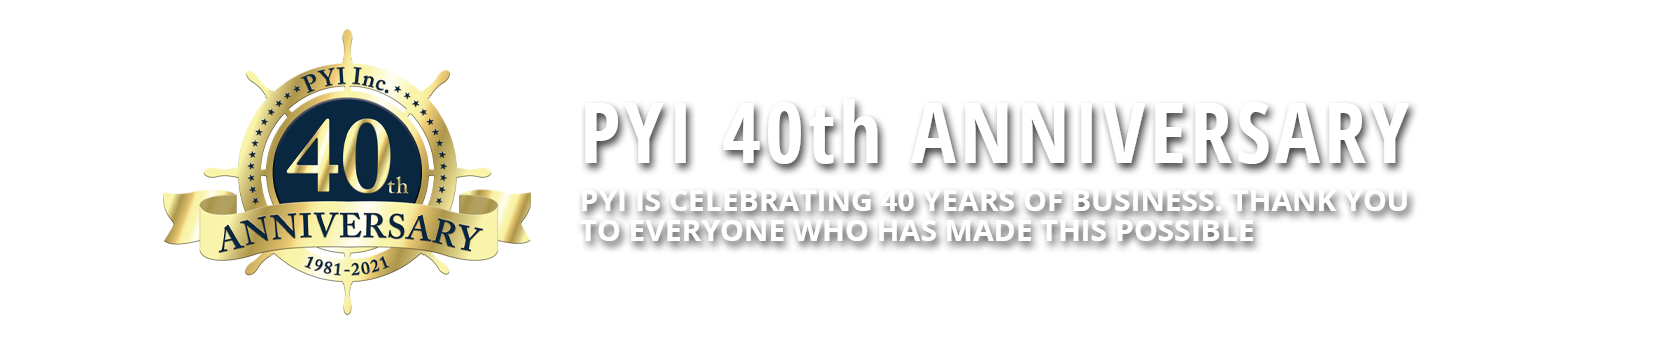 PYI 40th anniversary